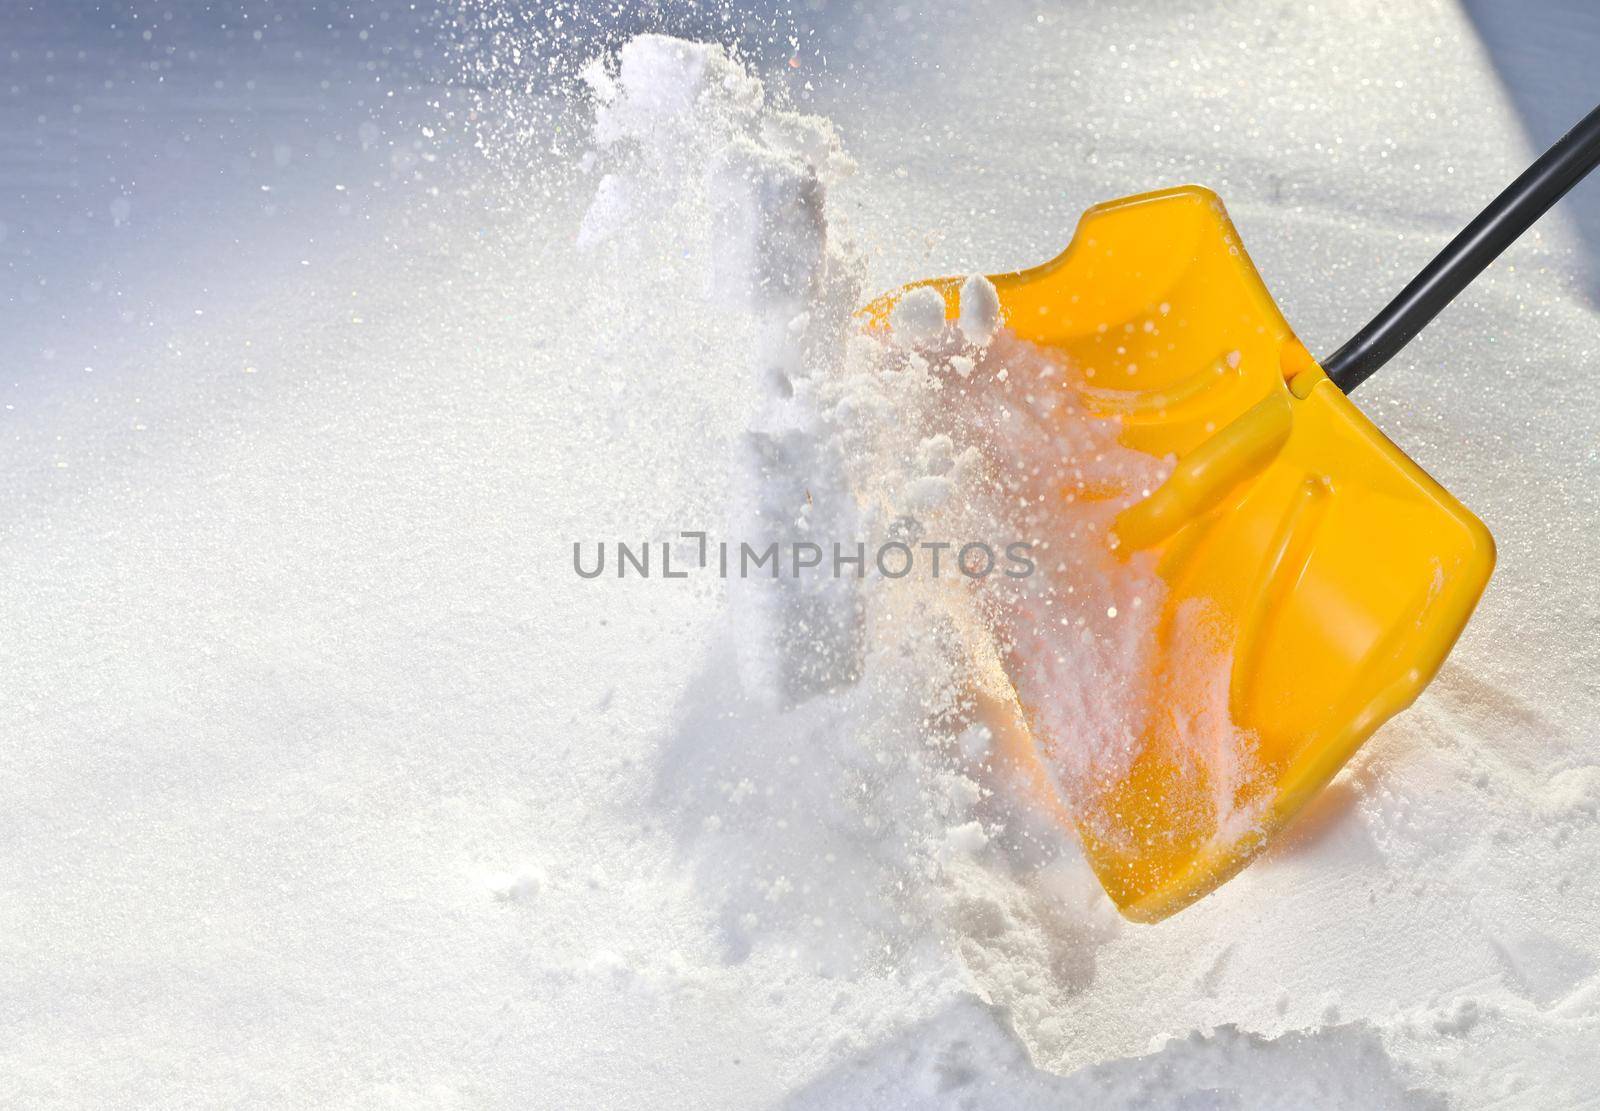 Yellow Snow Shovel Shoveling Fresh, Deep Powdery Snow by markvandam